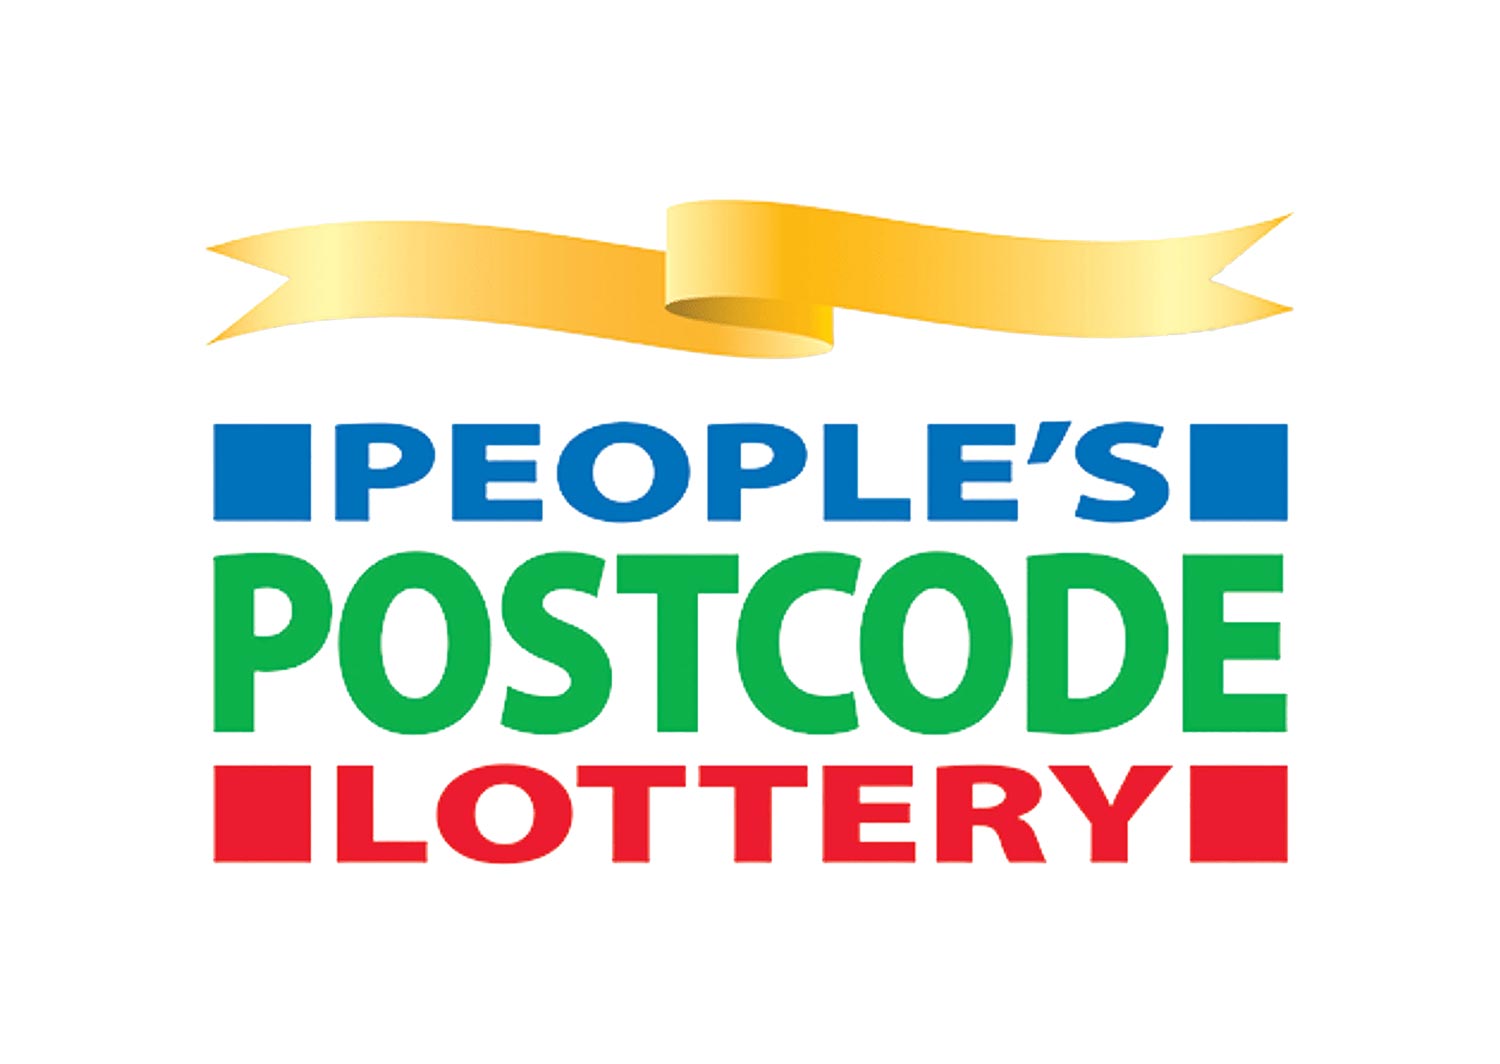 3. People’s Postcode Lottery